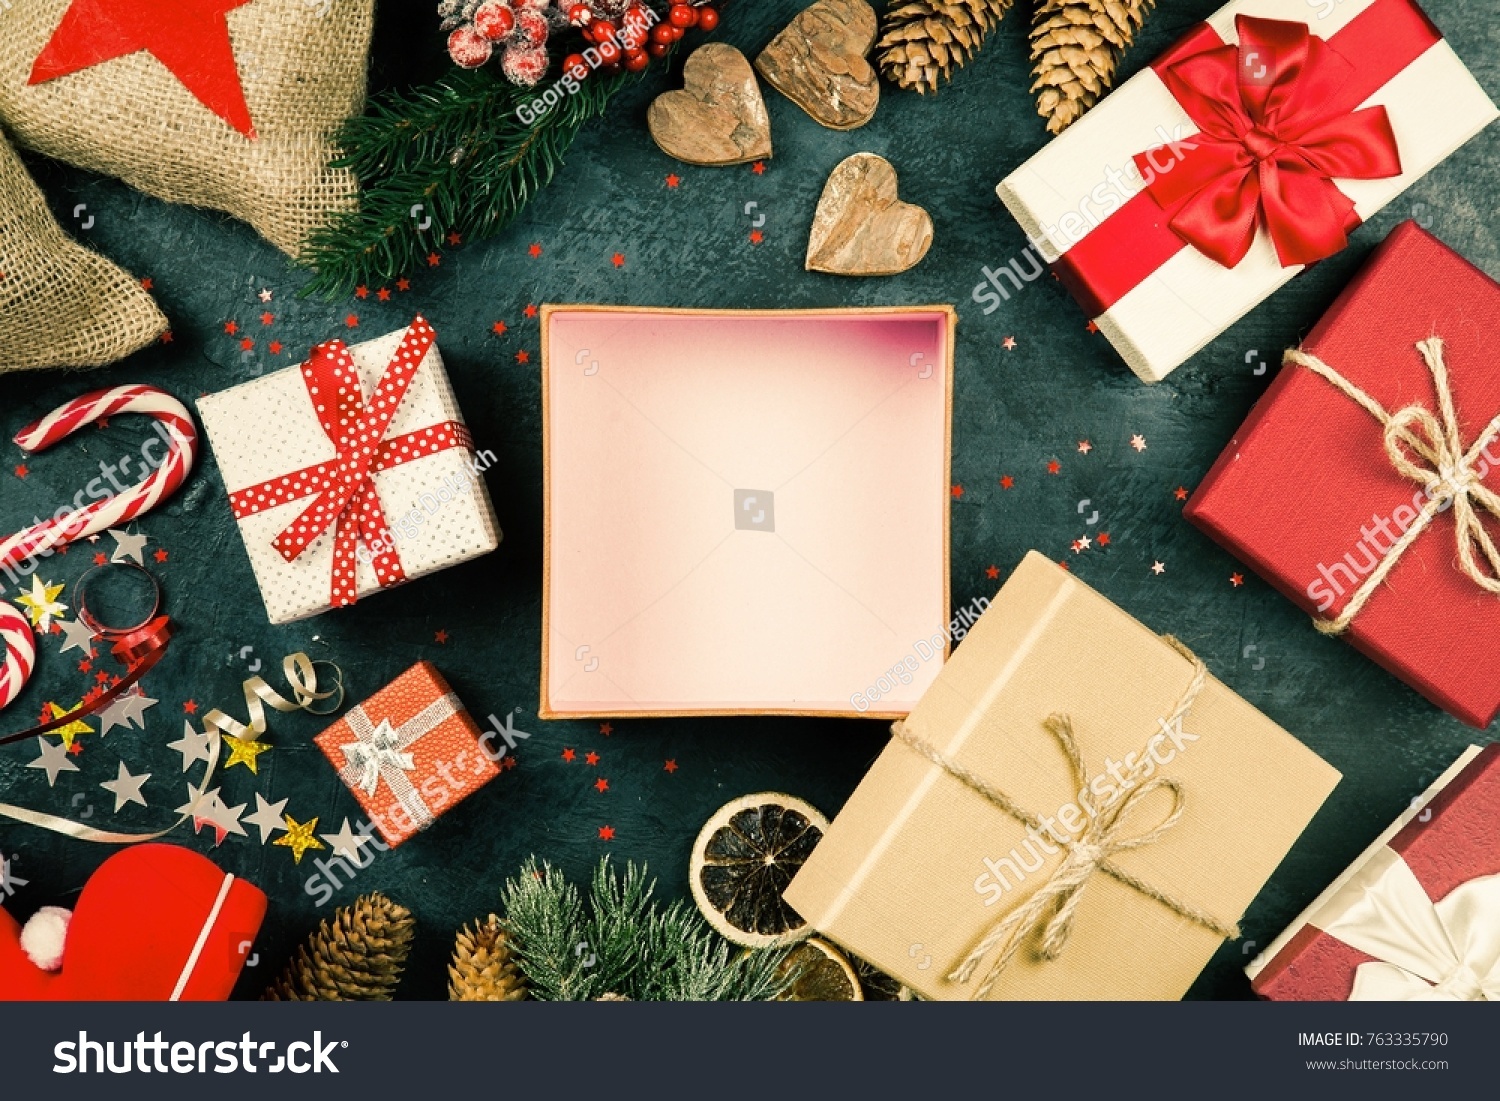 Christmas presents on dark background #763335790